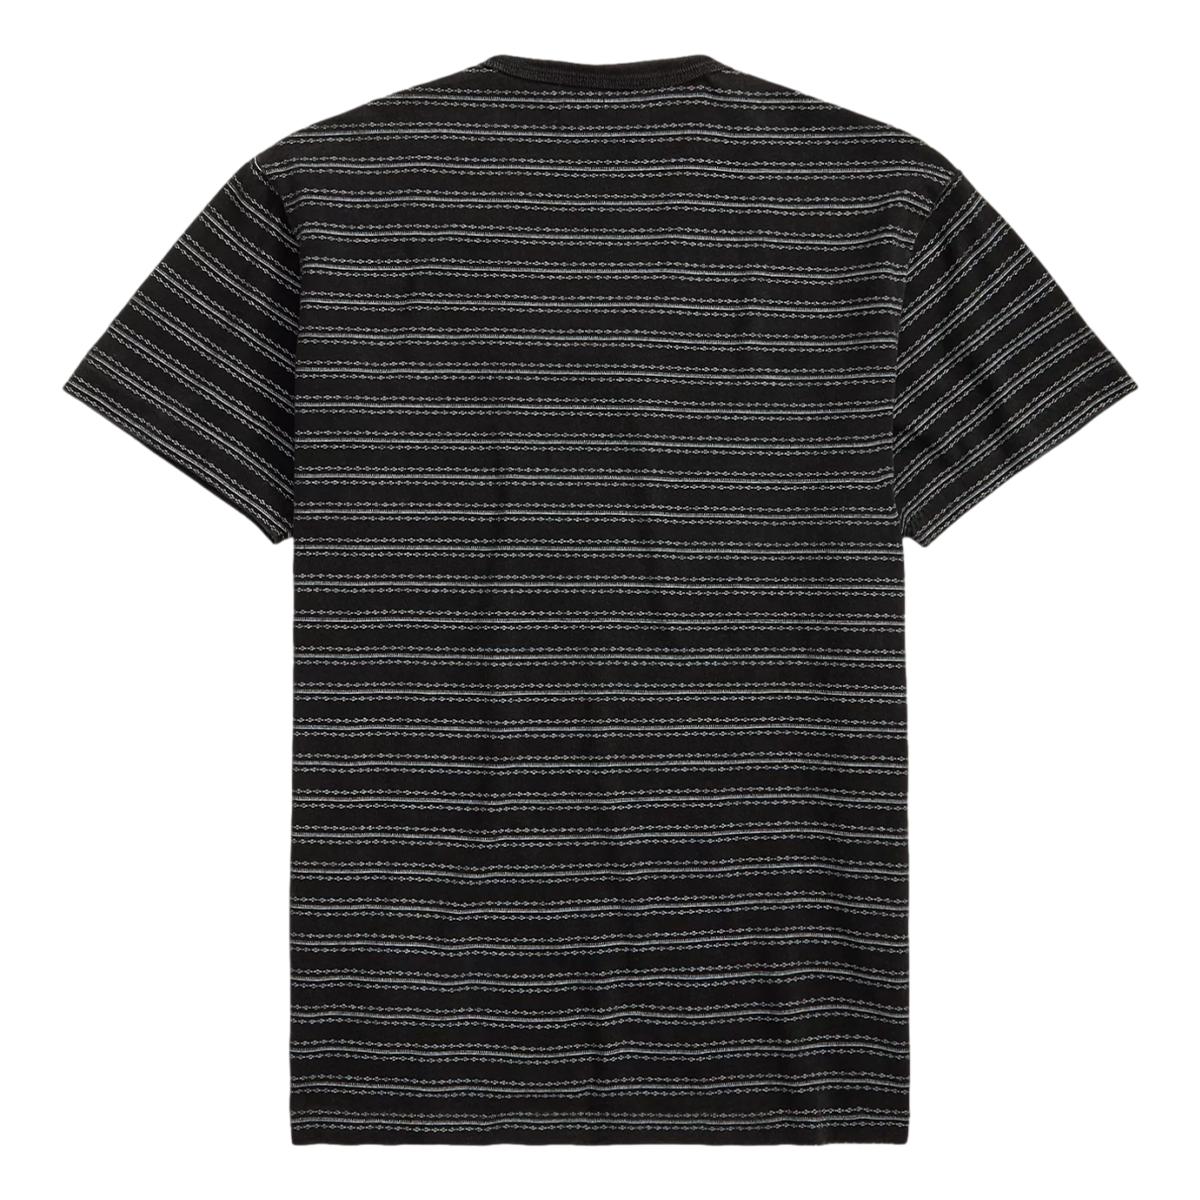 Indigo Striped Jersey T-Shirt Black Multi - T Shirt